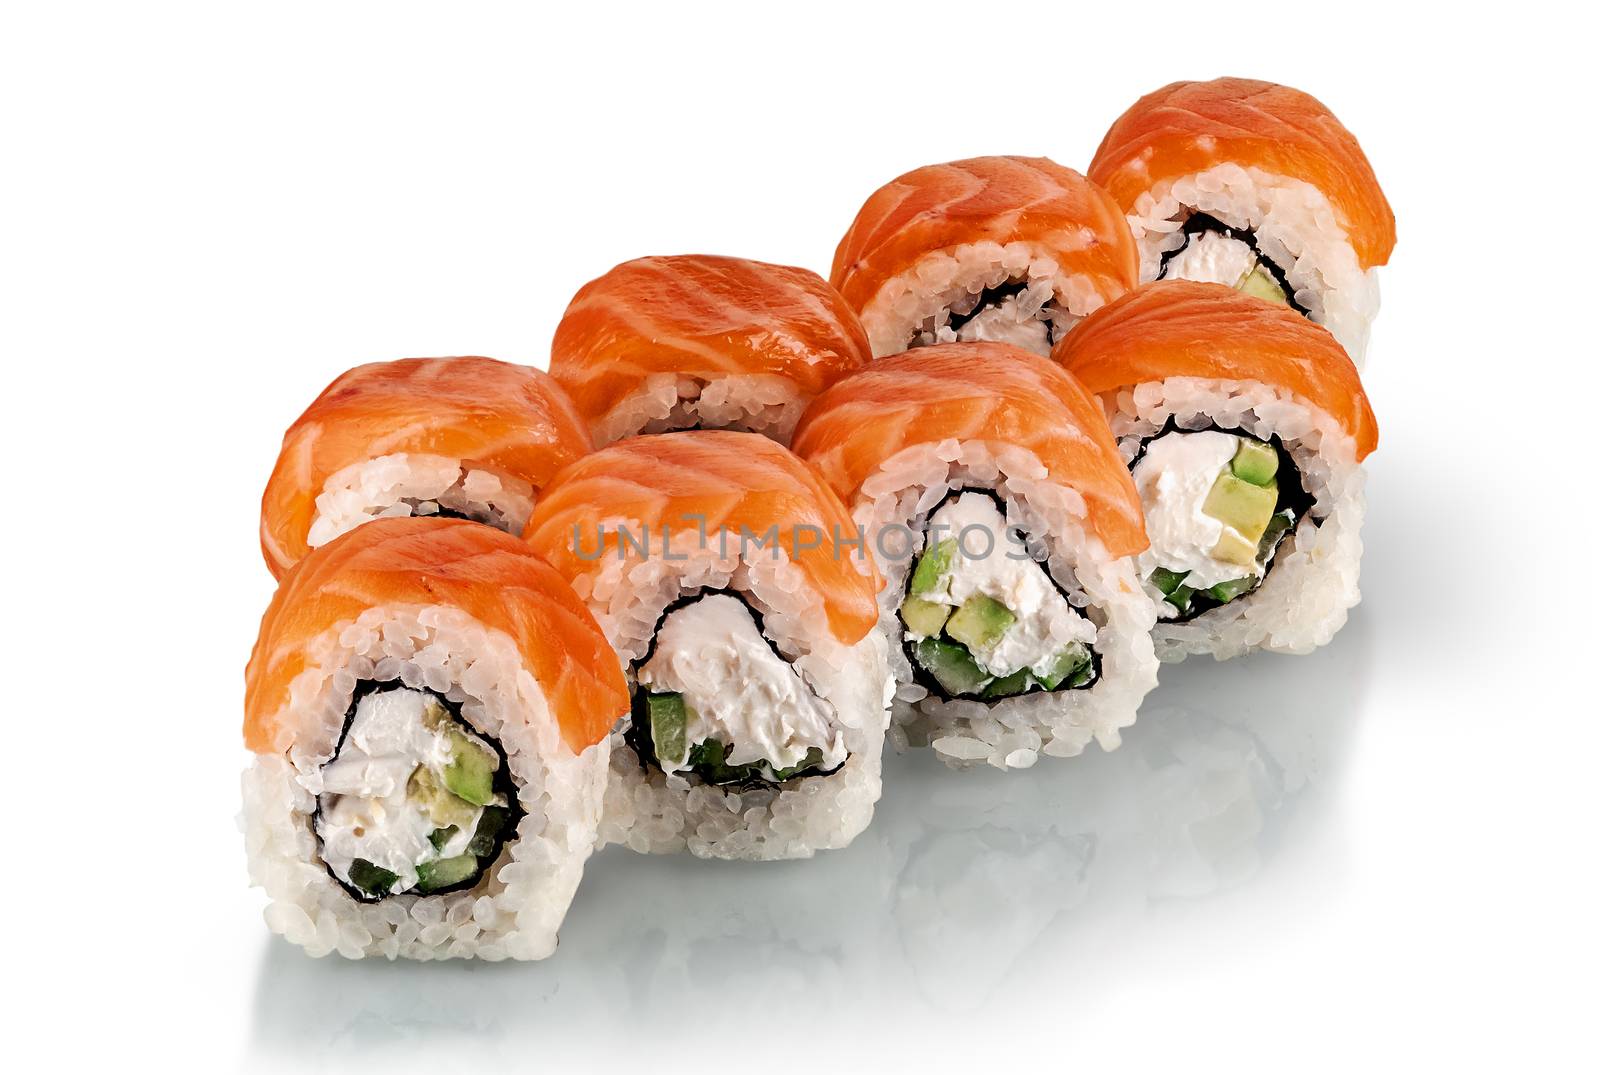 Few pieces of Philadelphia sushi rolls by Cipariss